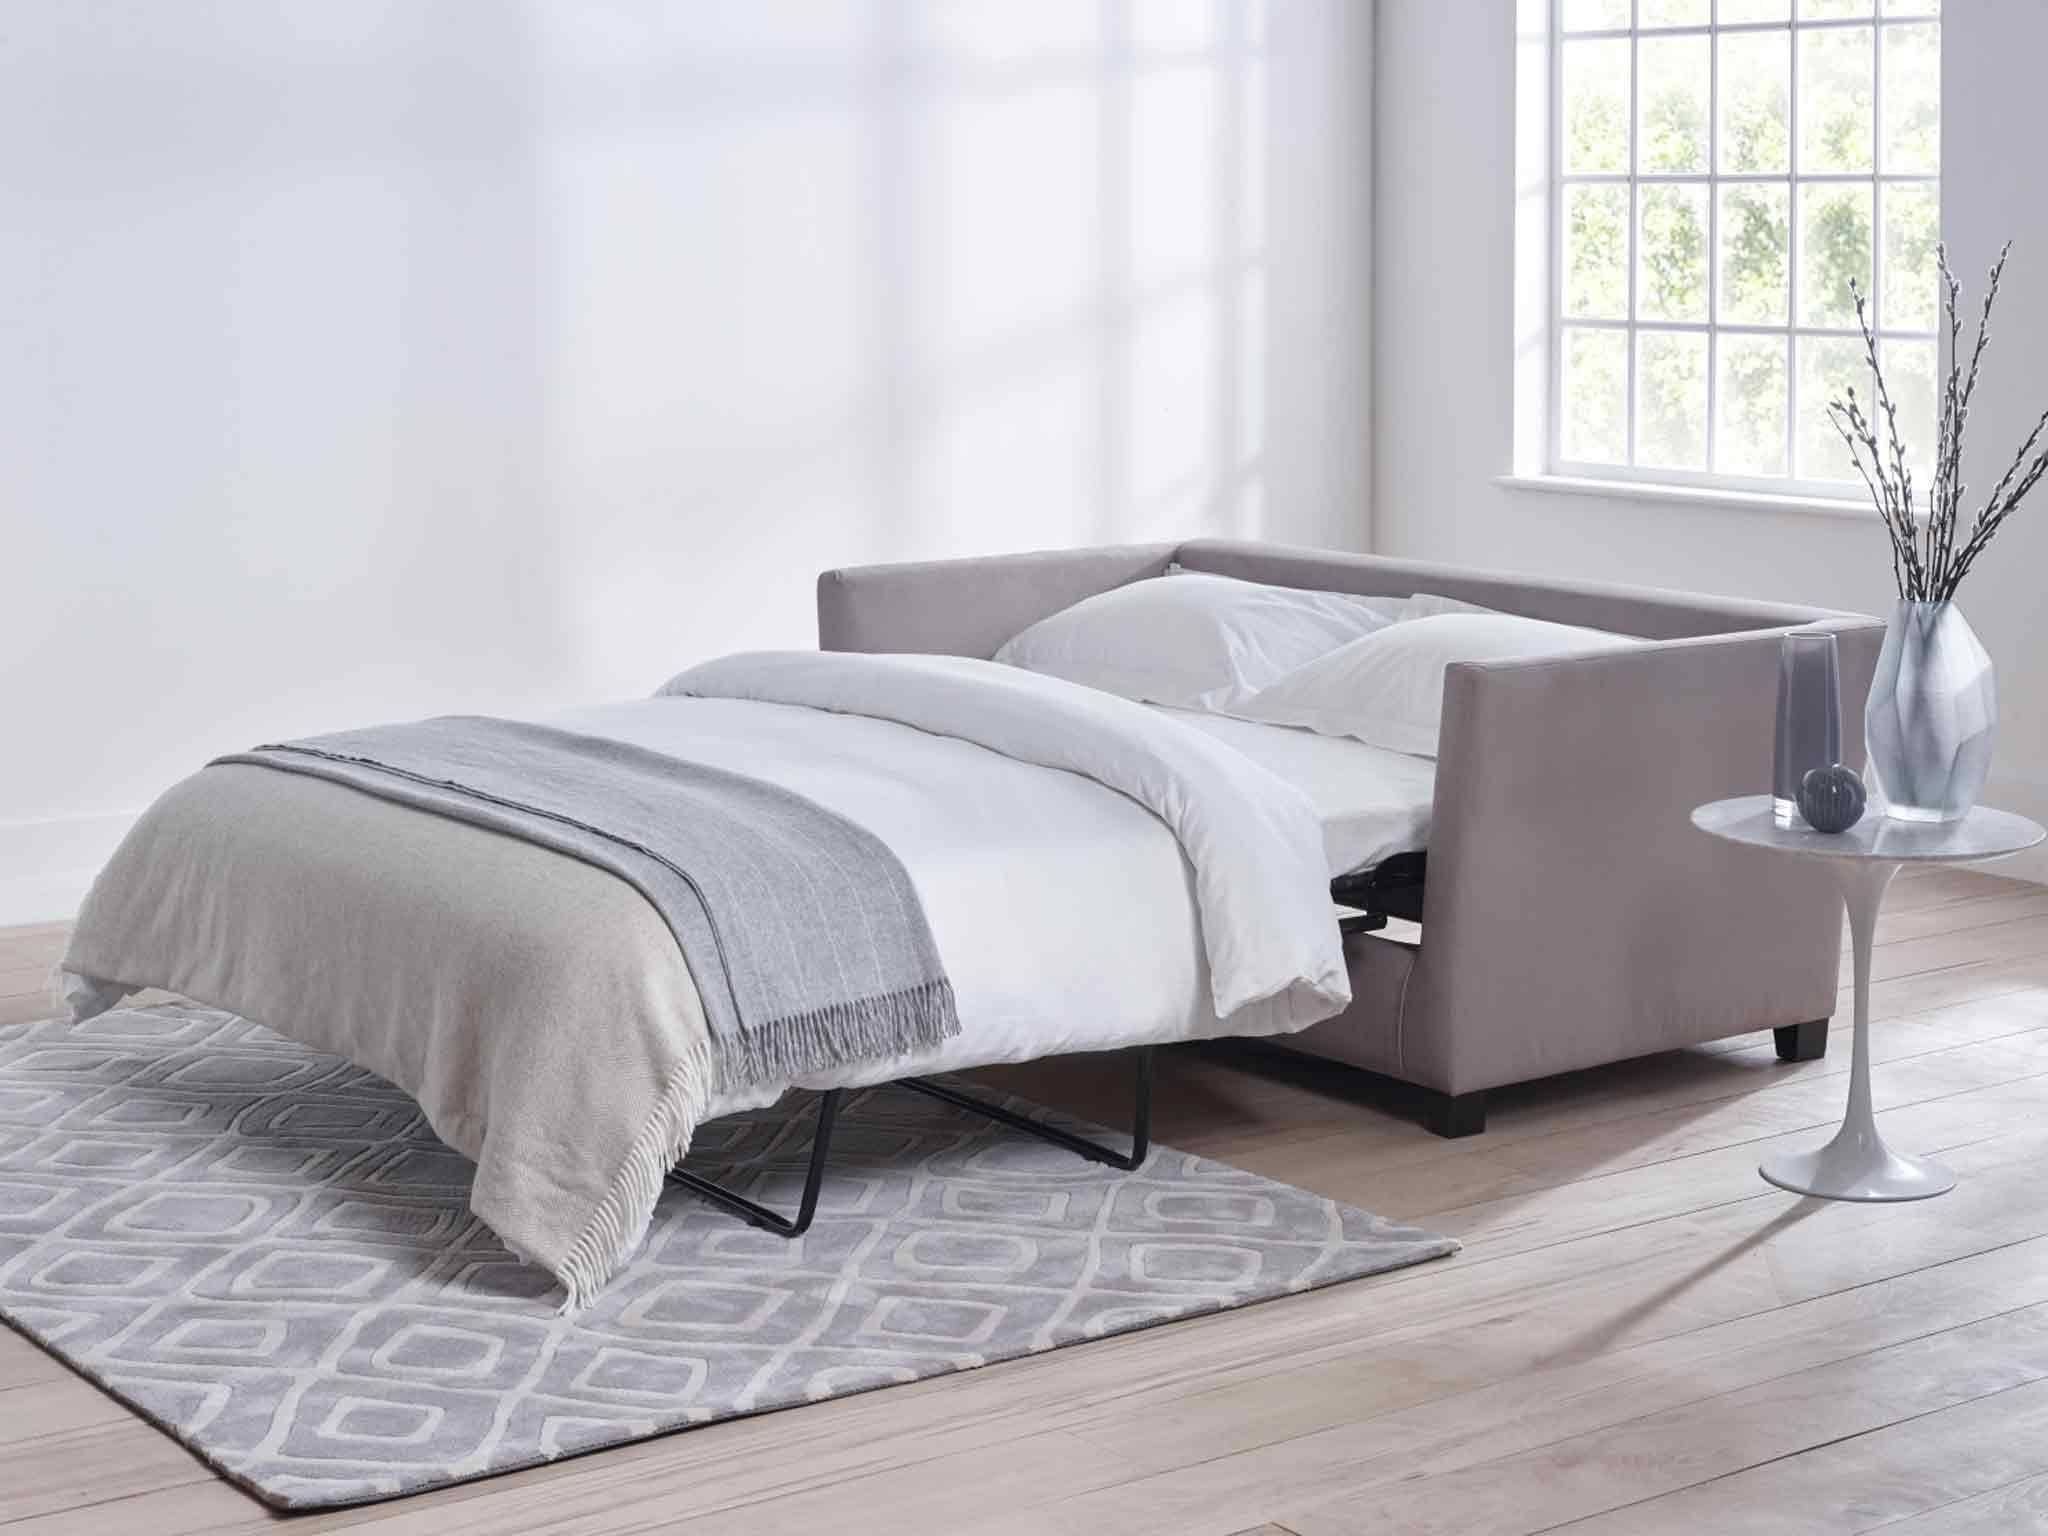 sheets for sofa bed mattress